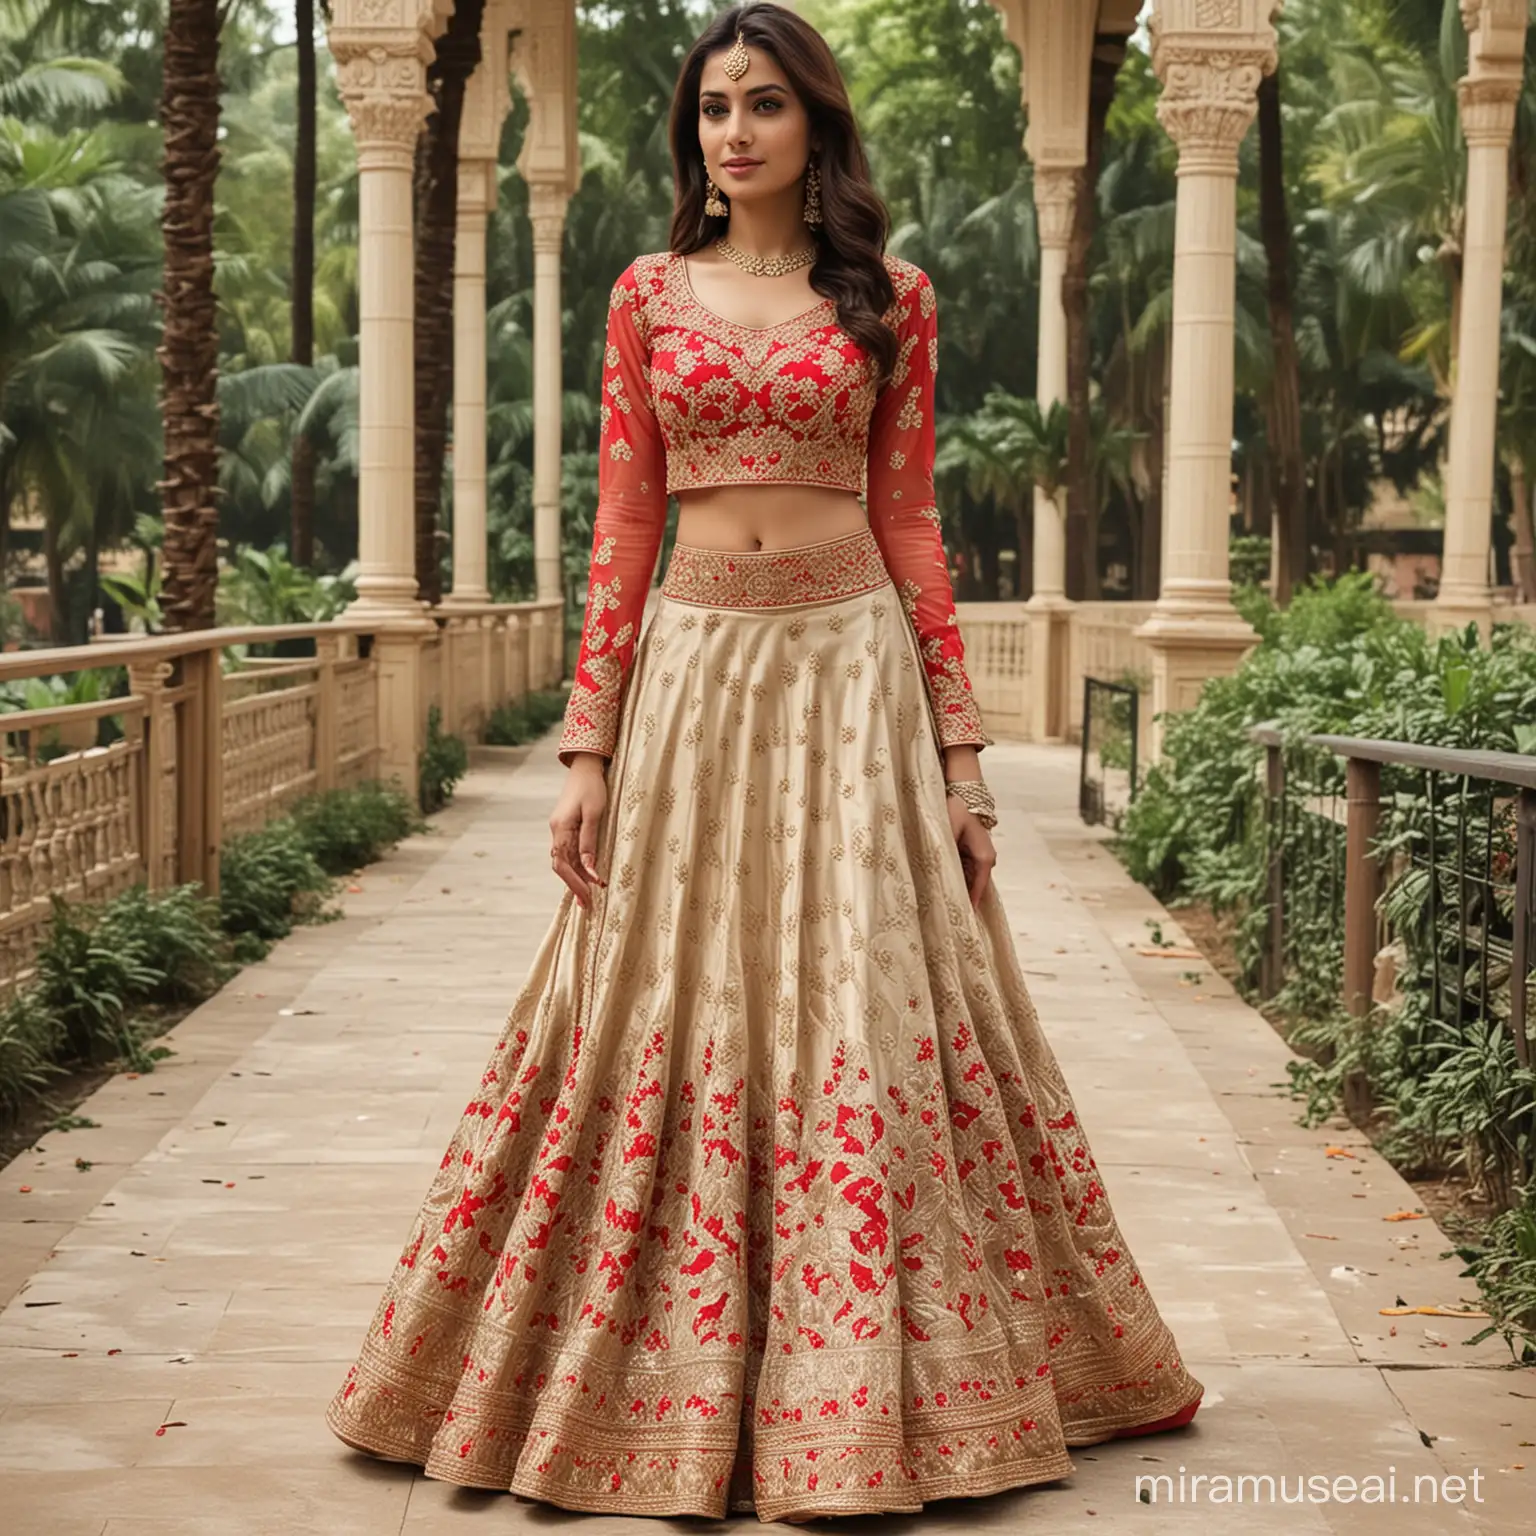 Indian Lehenga Skirts with Western Style Blouse Fusion Bridal Attire